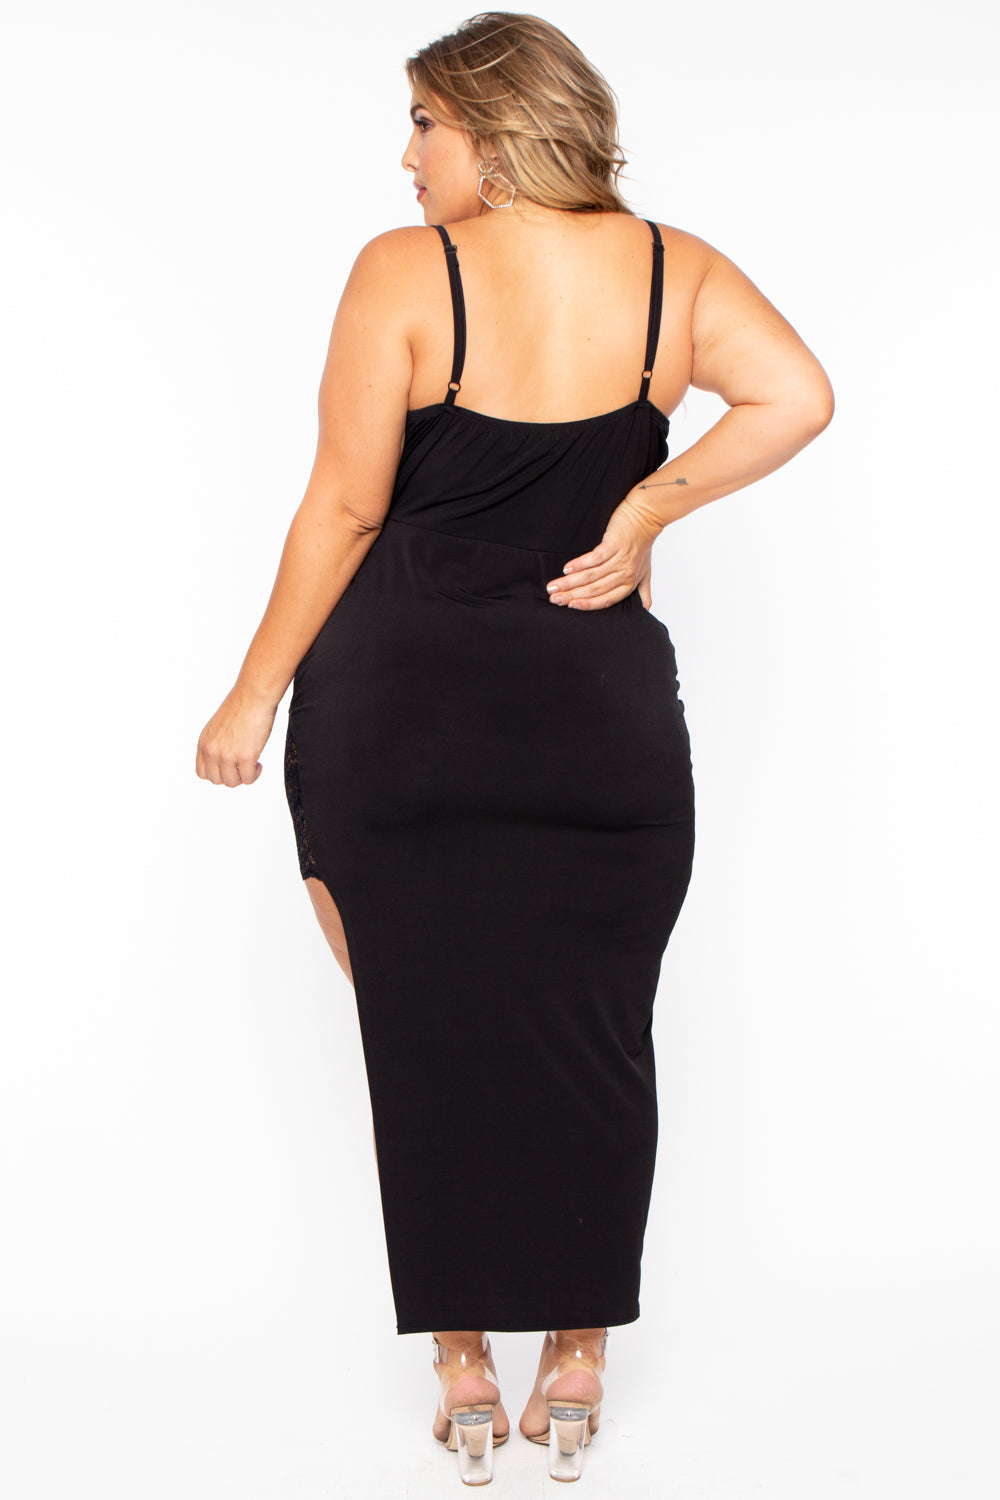 Plus Size Vavavoom Lace Inset Dress - Black - Curvy Sense